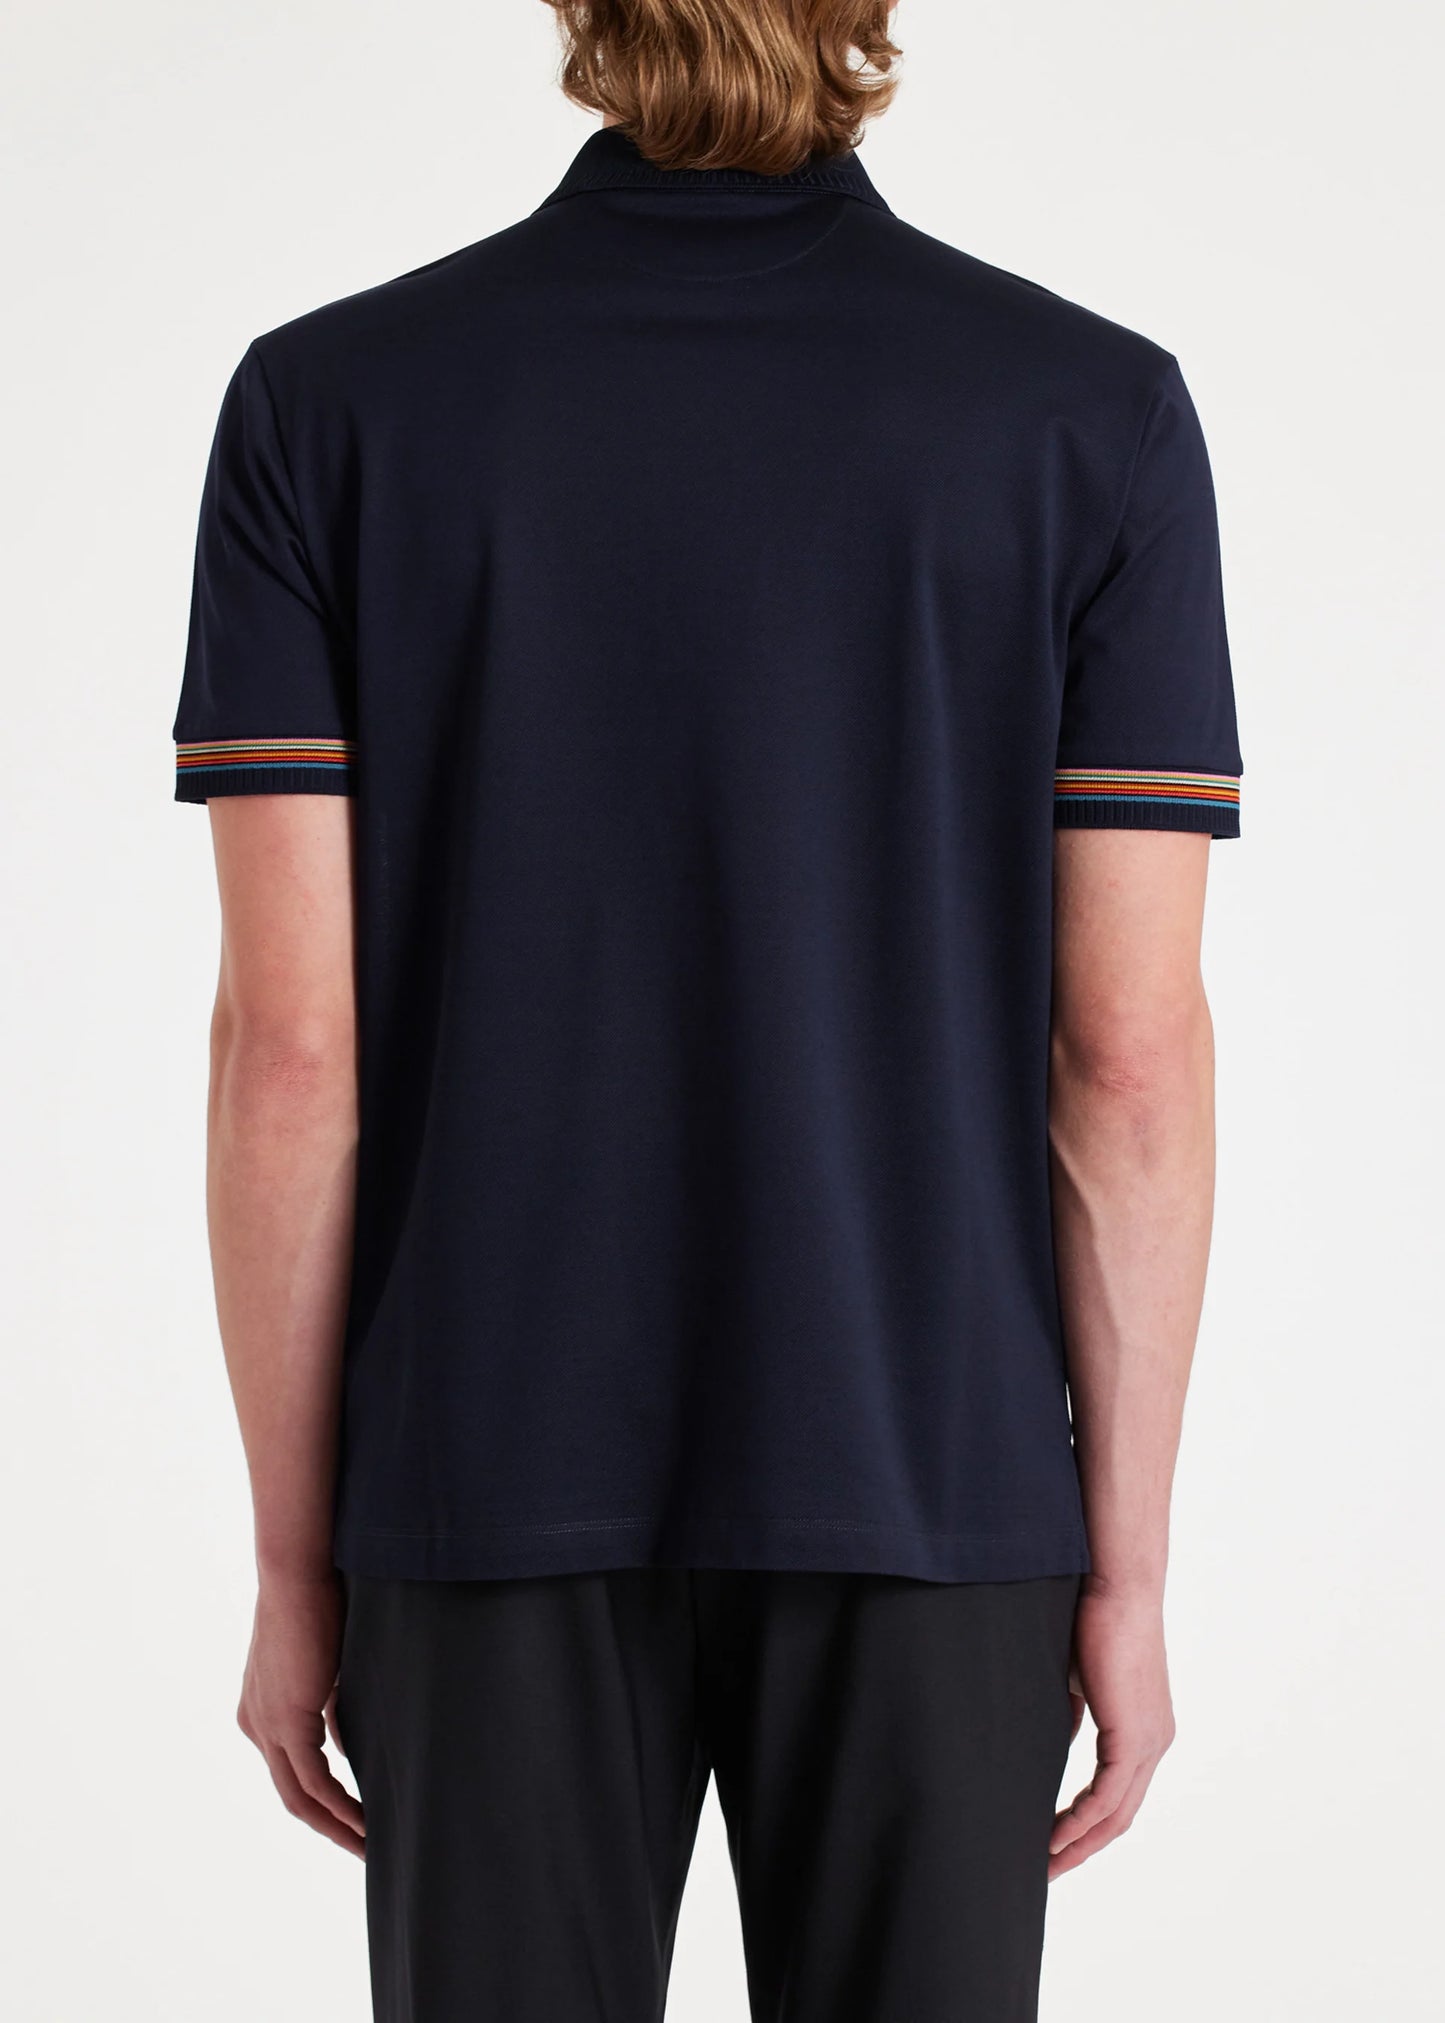 Paul Smith Navy Cotton 'Signature Stripe' Trim Zip Polo Shirt